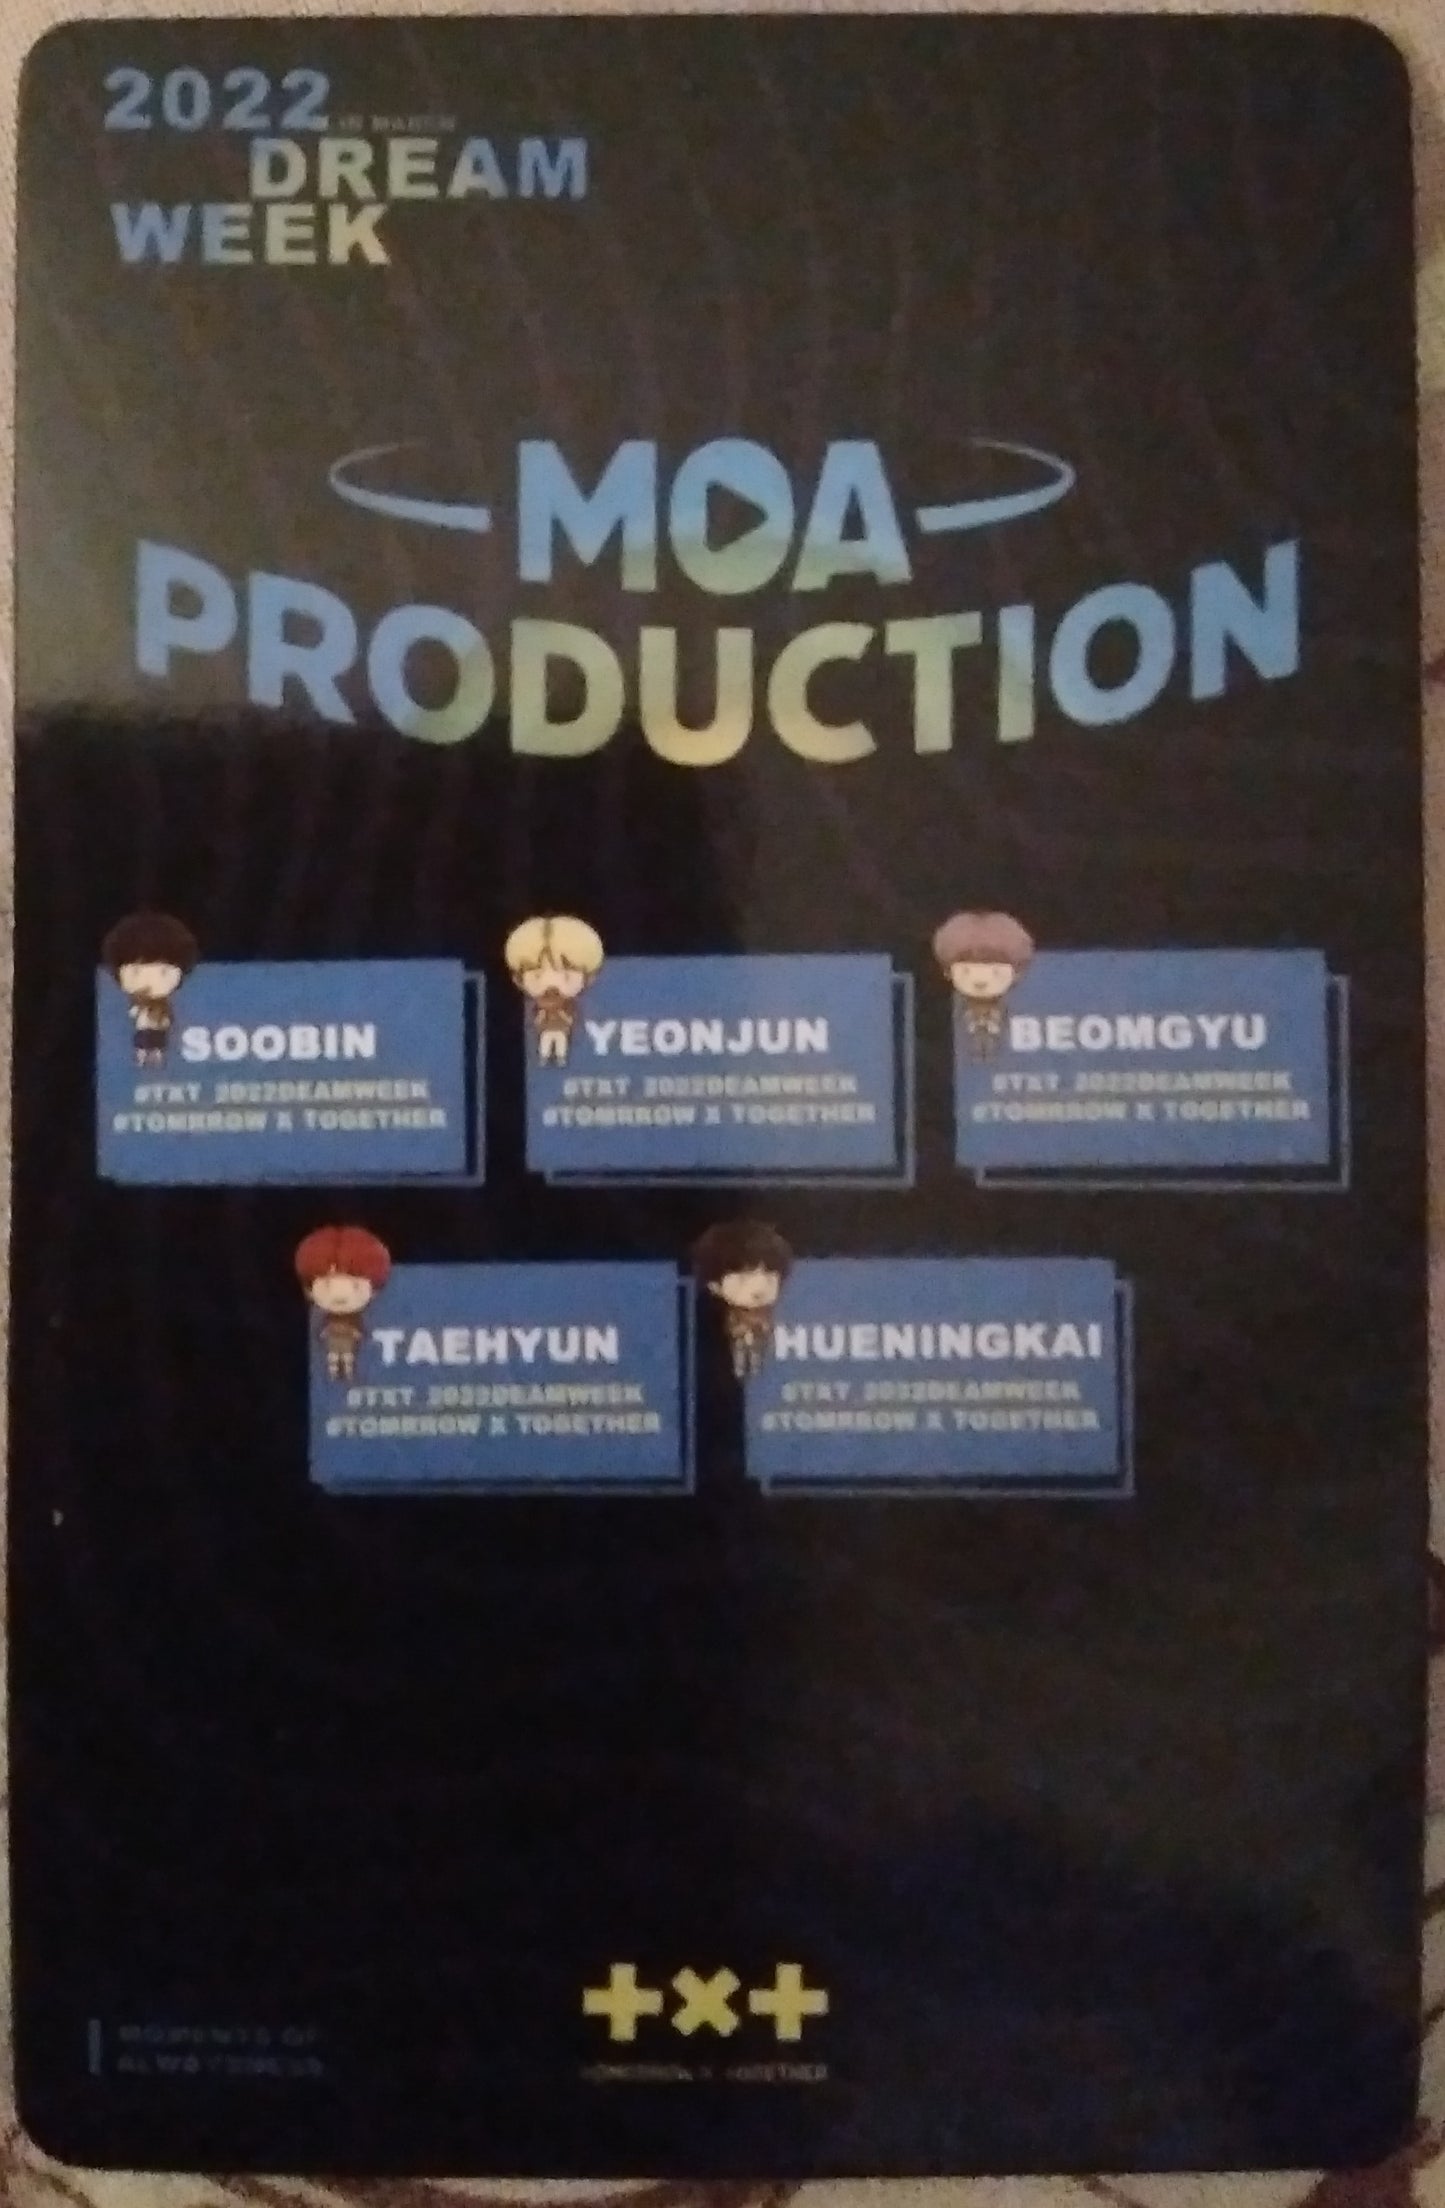 Photocard TXT Dream week 2022 Moa production  Beomgyu